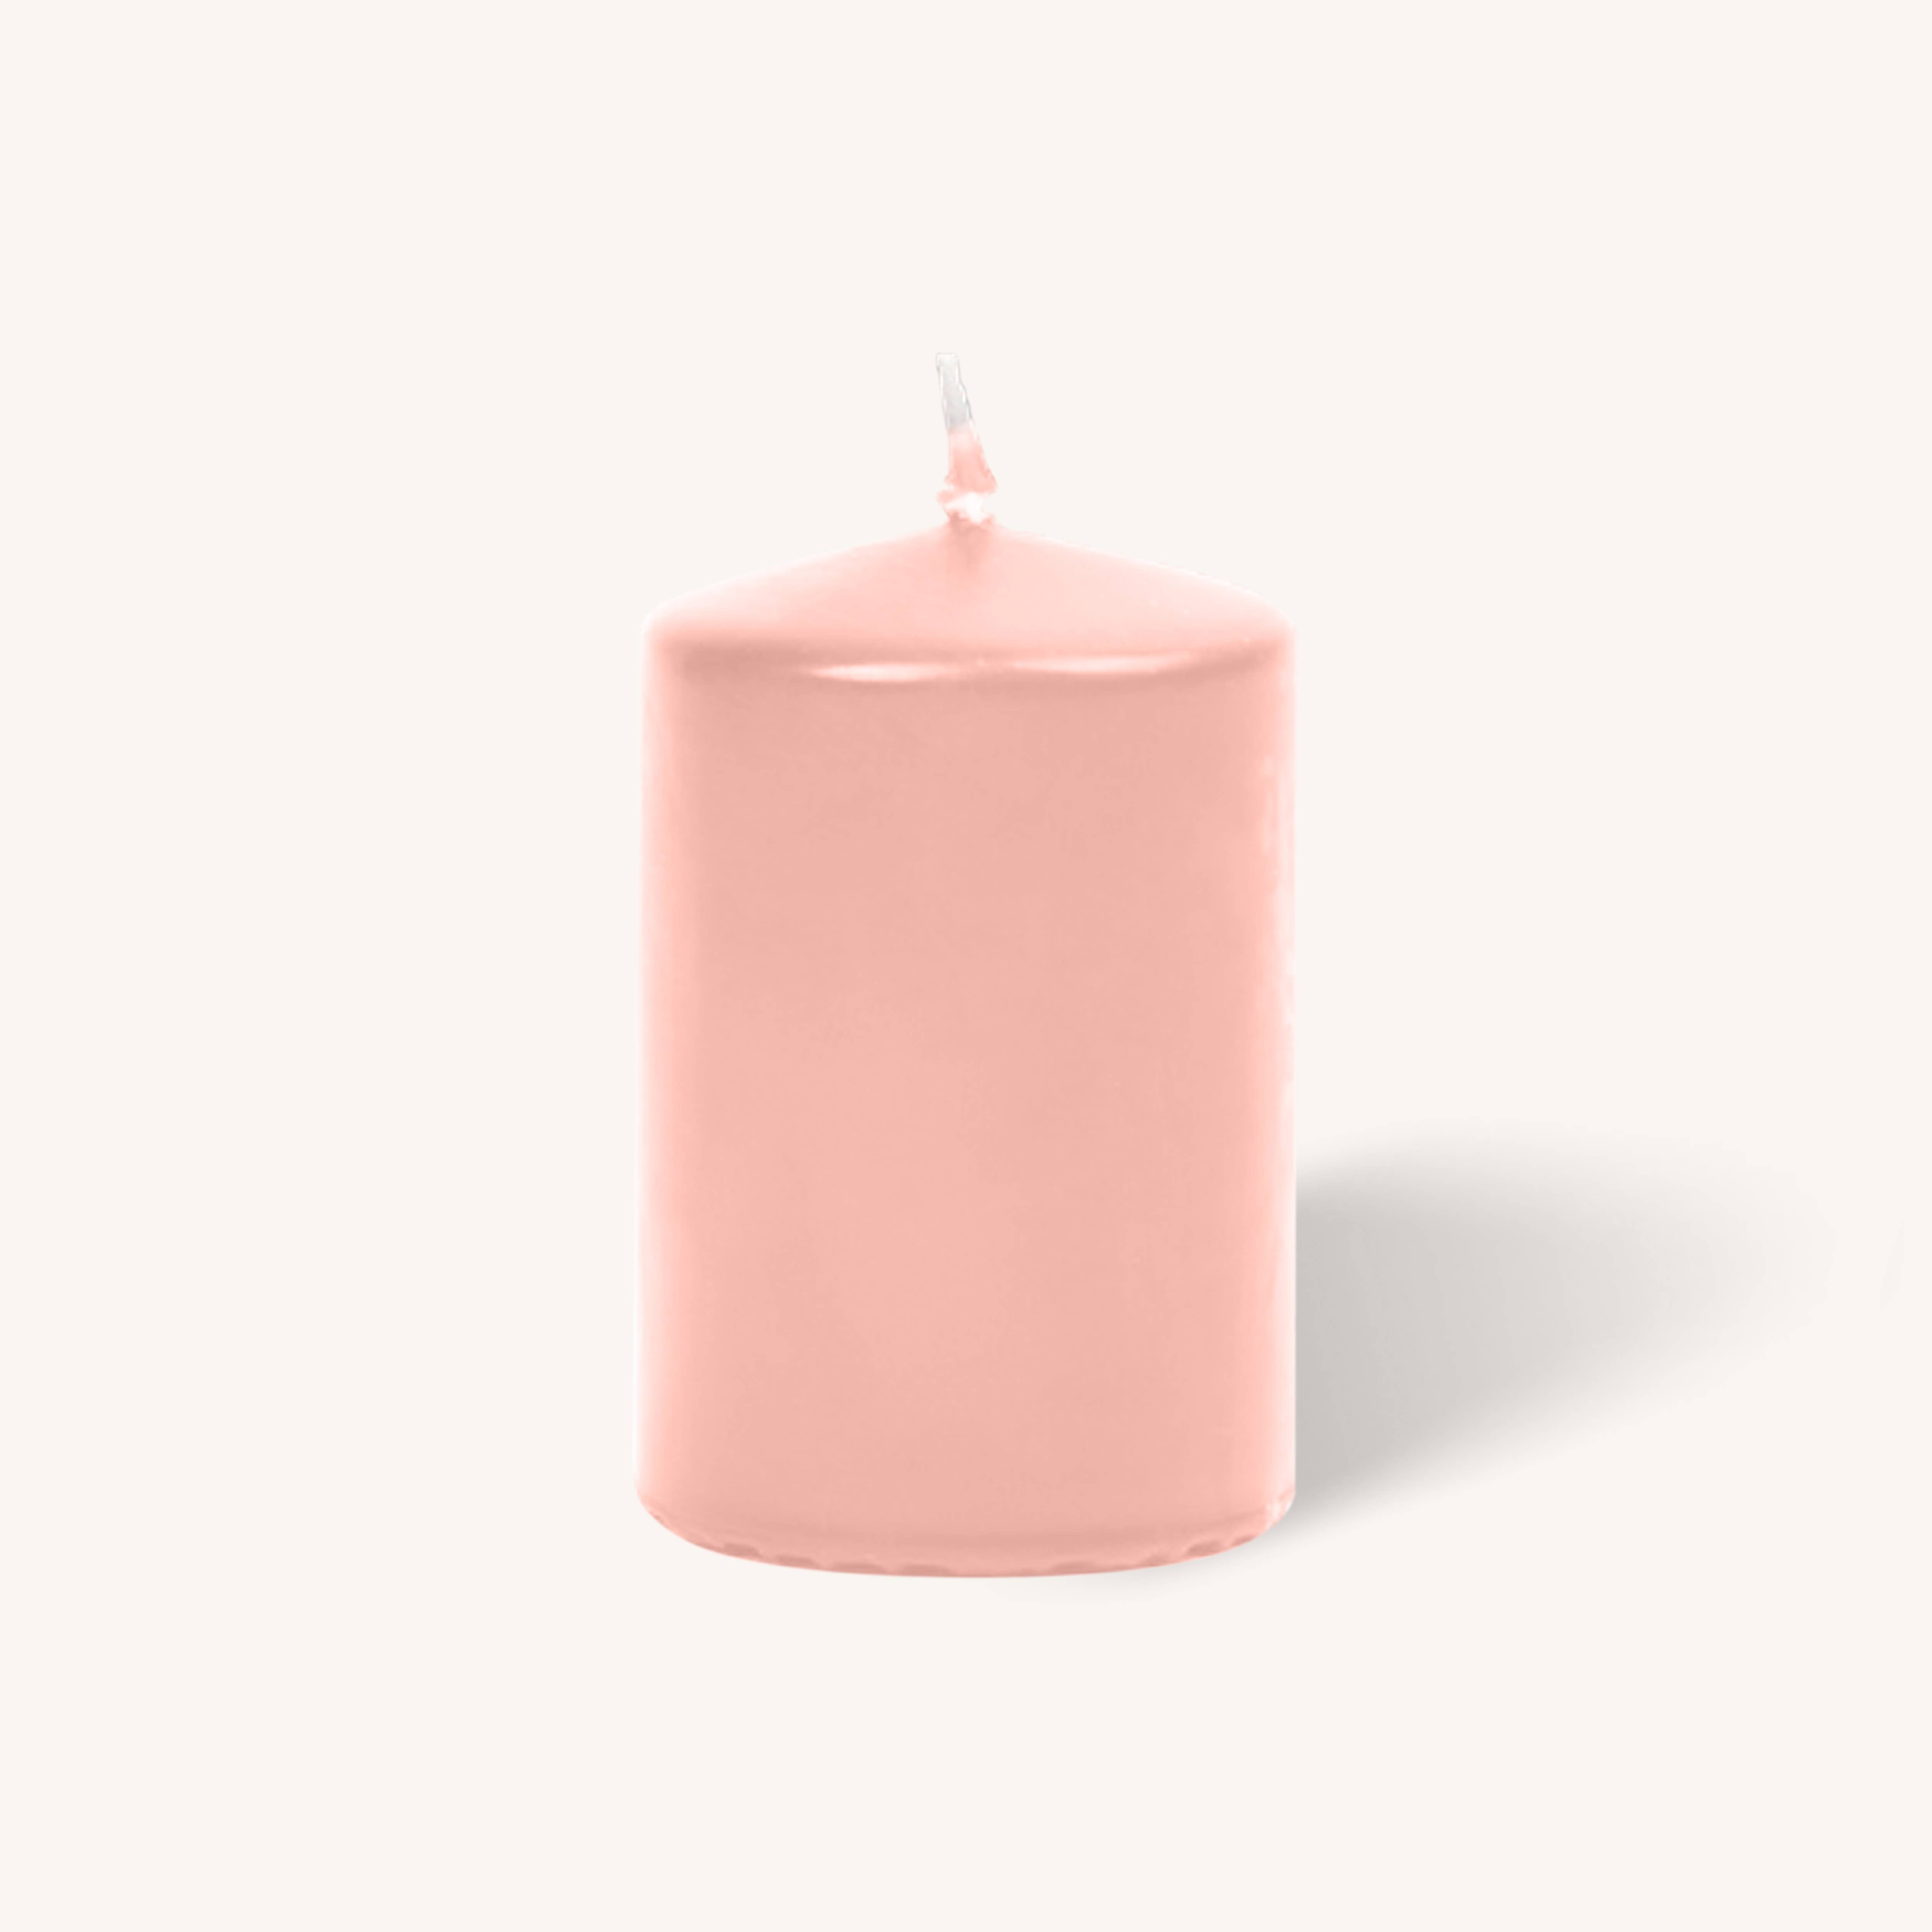 Rose Pink Pillar Candles - 2" x 3" - 4 Pack